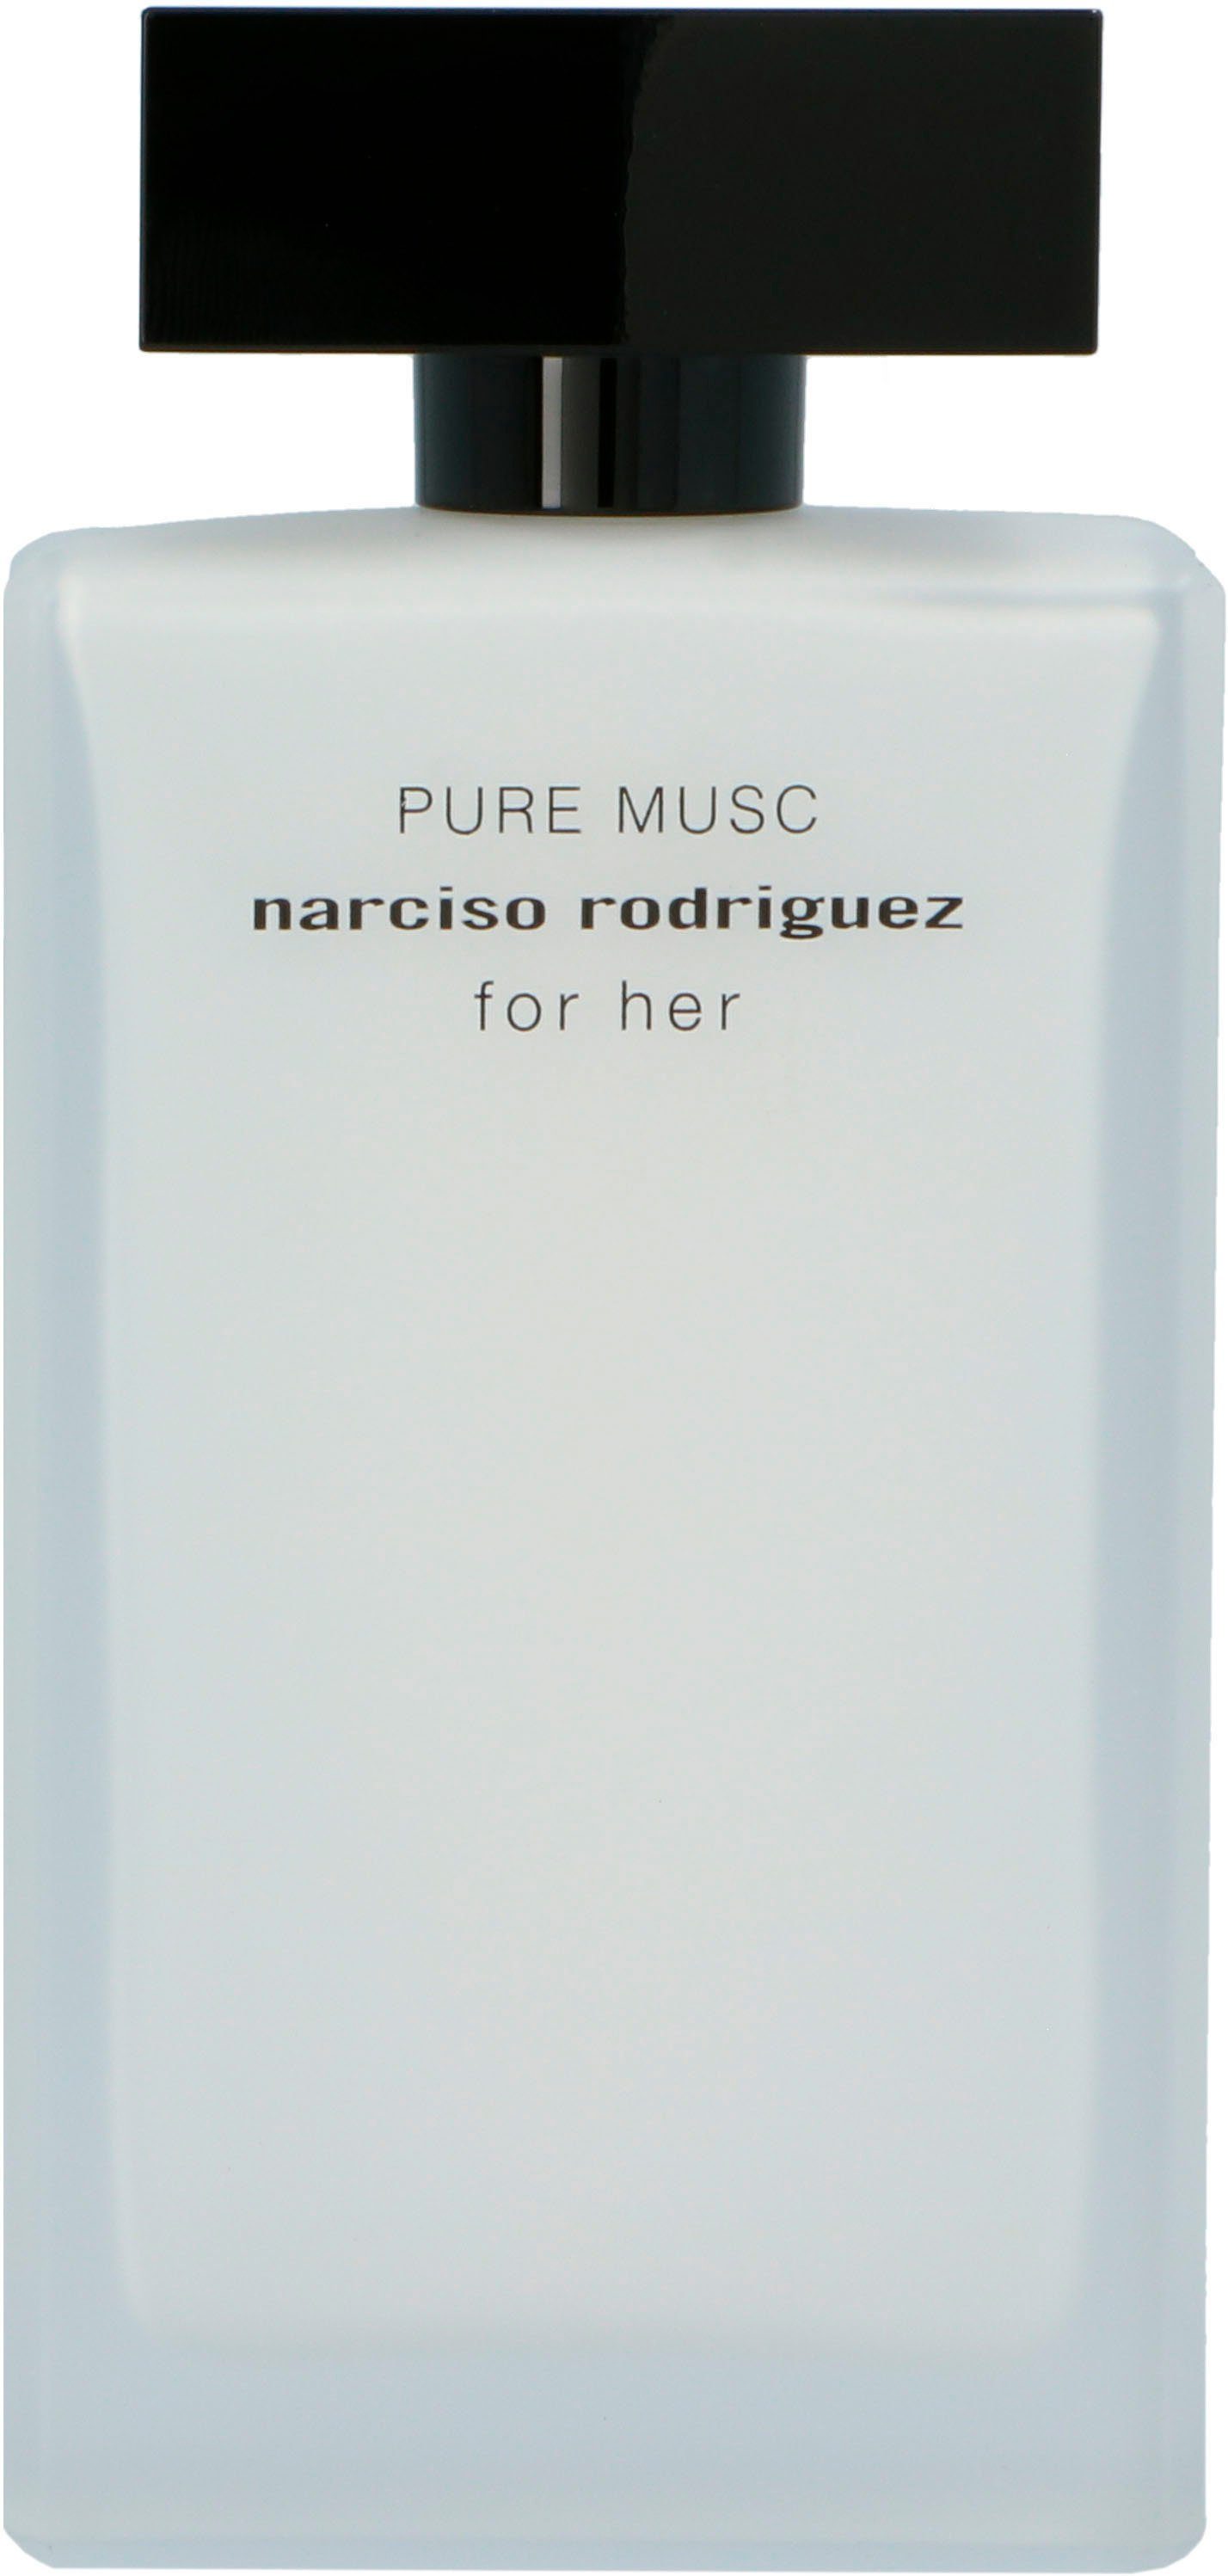 Pure Musc Eau de narciso for Her Parfum Rodriguez Narciso rodriguez